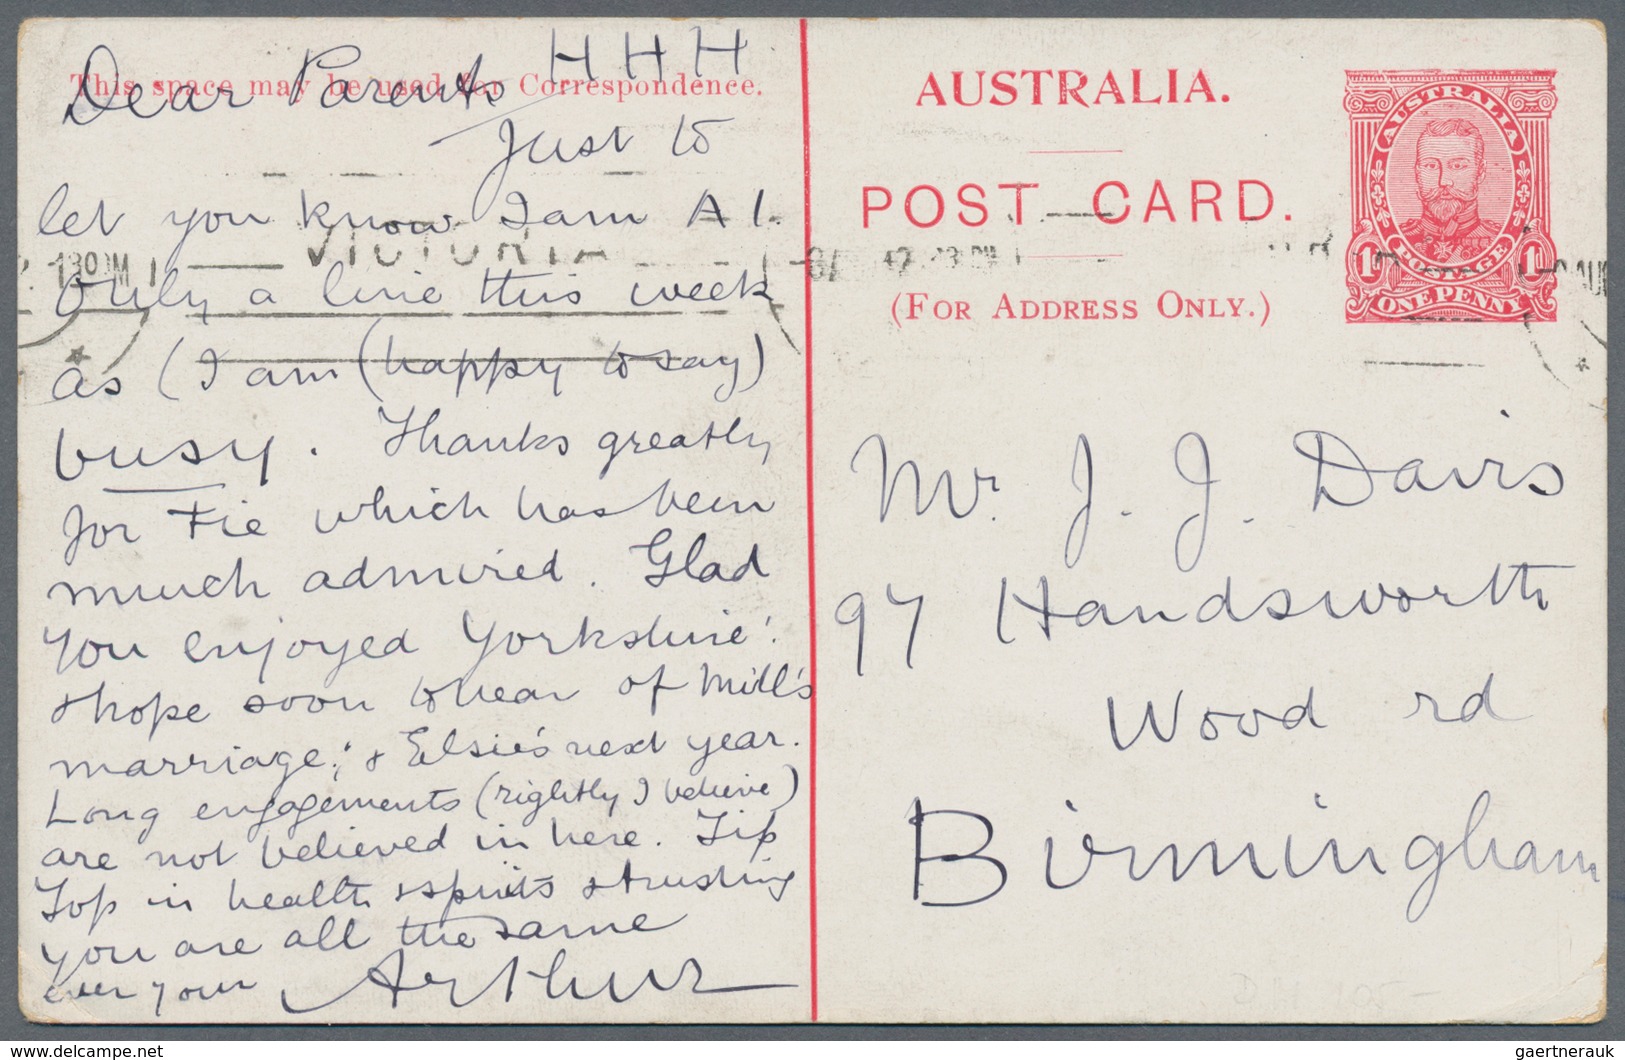 Australien - Ganzsachen: 1911/1914 (ca.), six Victorian Scenes postcards KGV 1d. full-face all comme